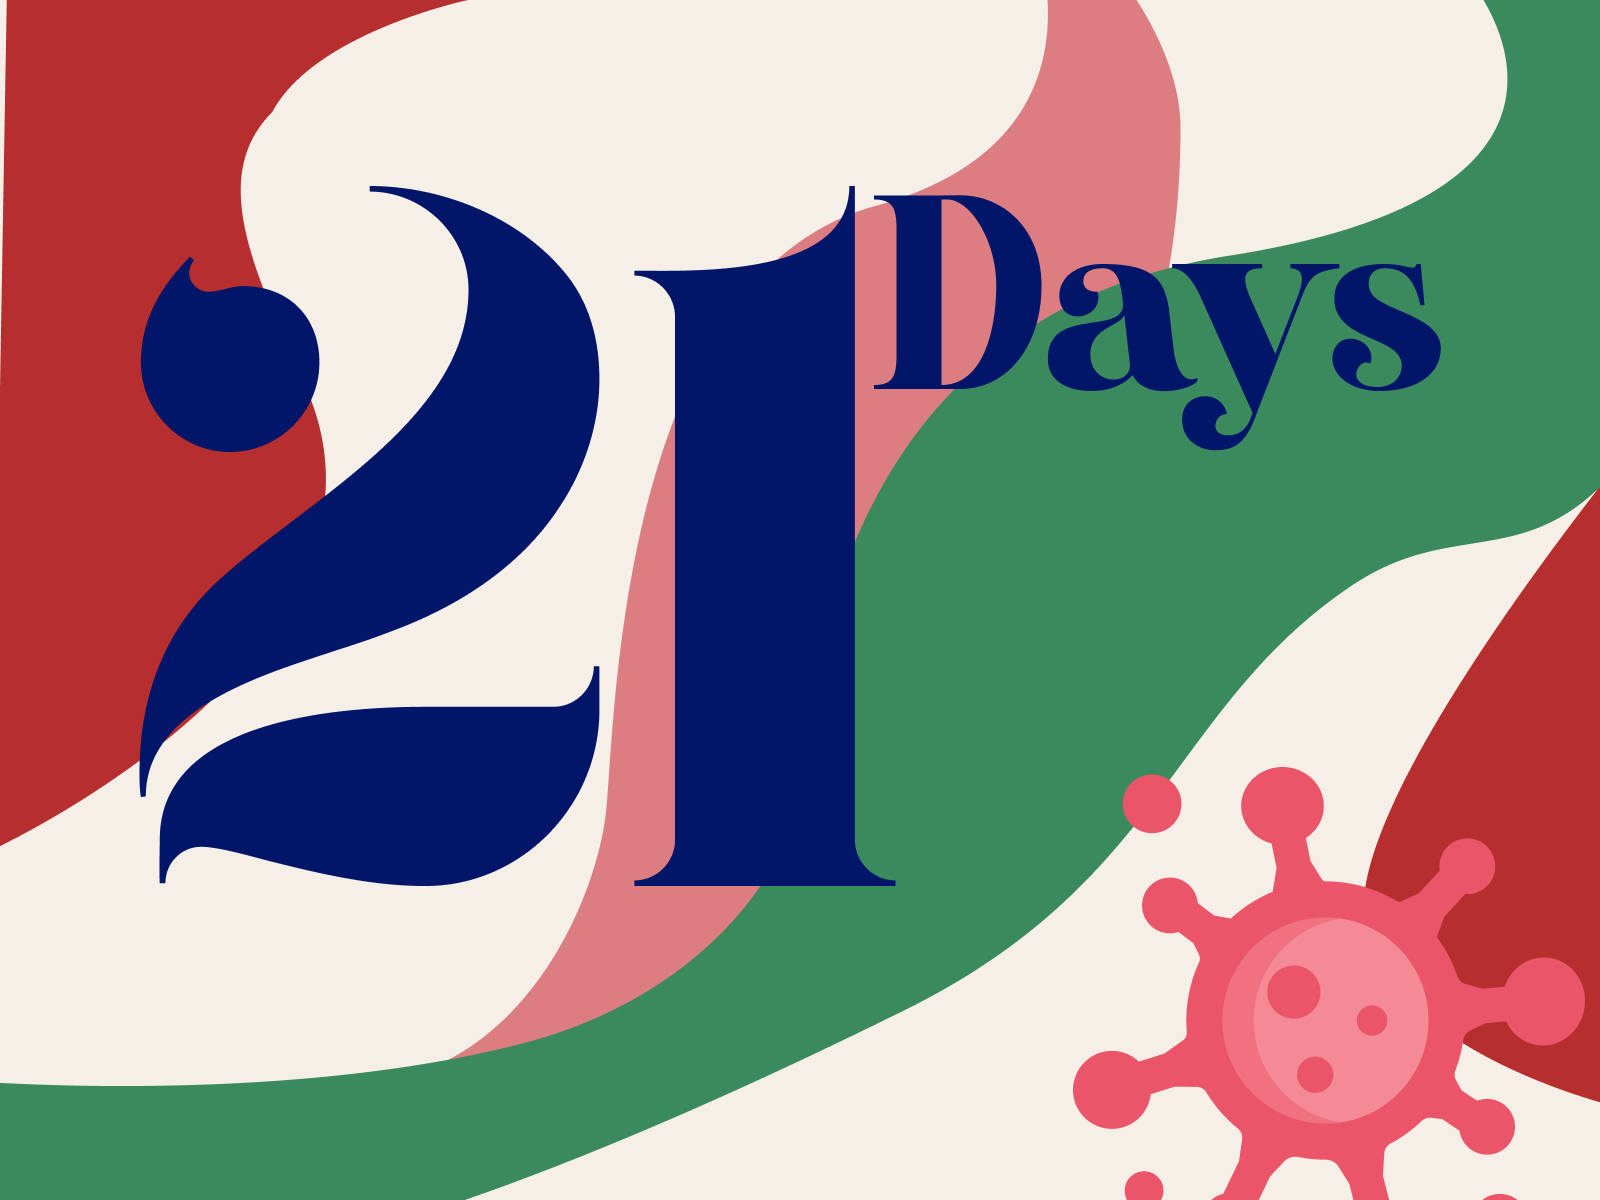 21 Days Lockdown challenge by Jalita de Waal on Dribbble